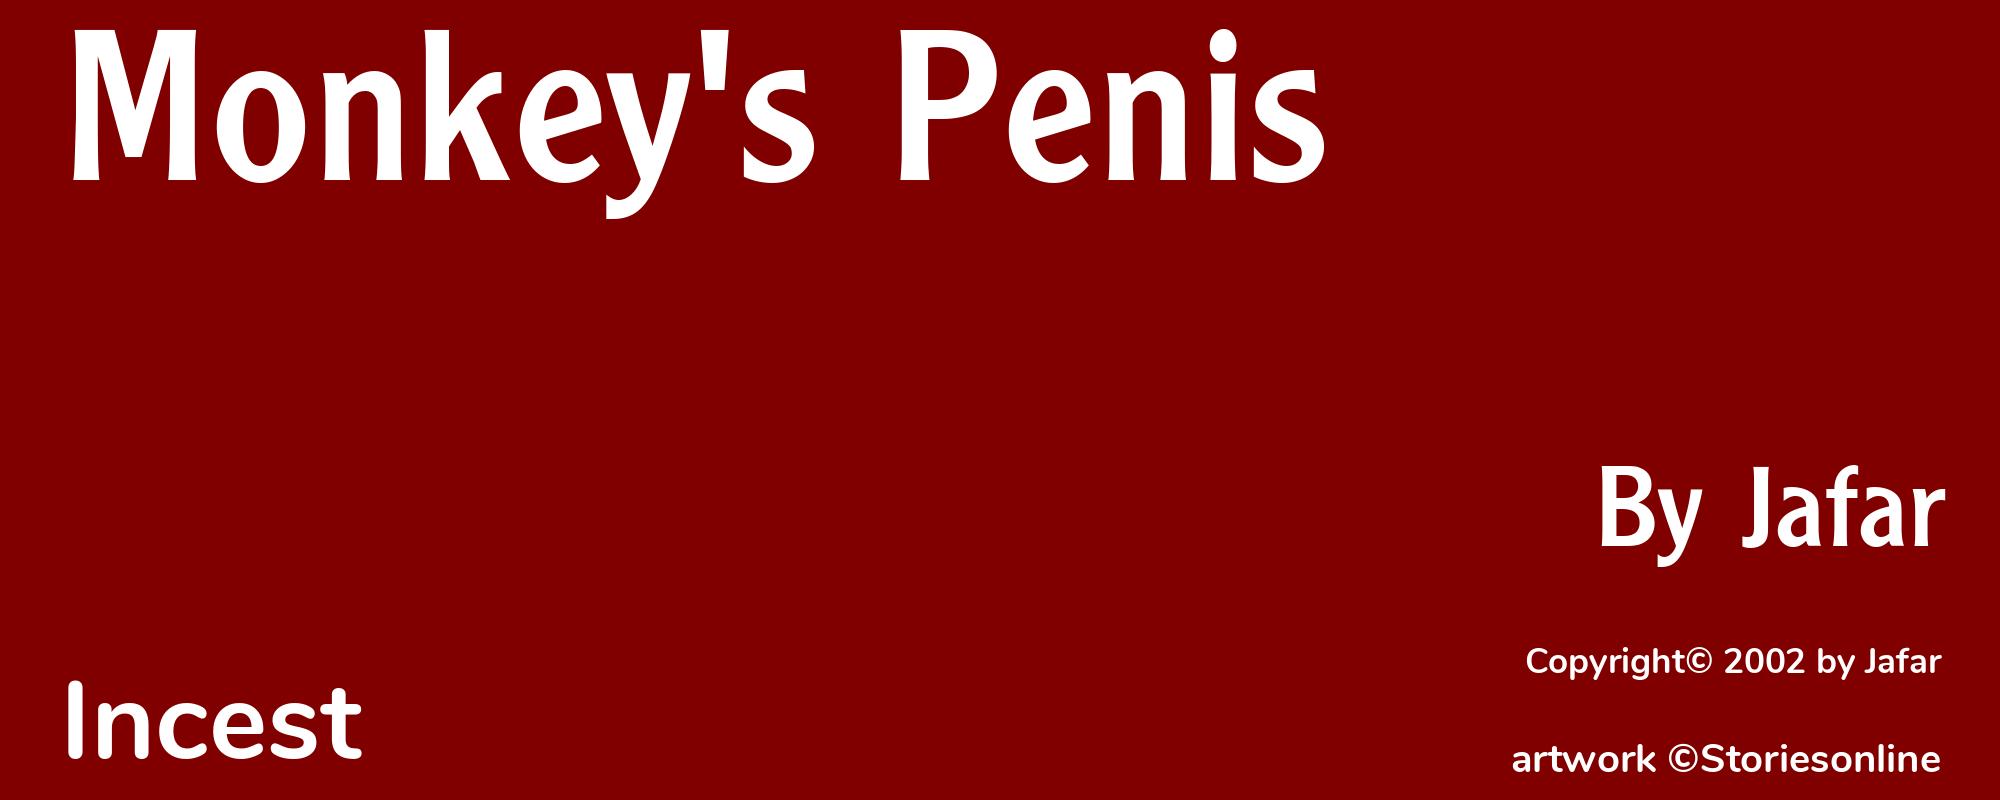 Monkey's Penis - Cover